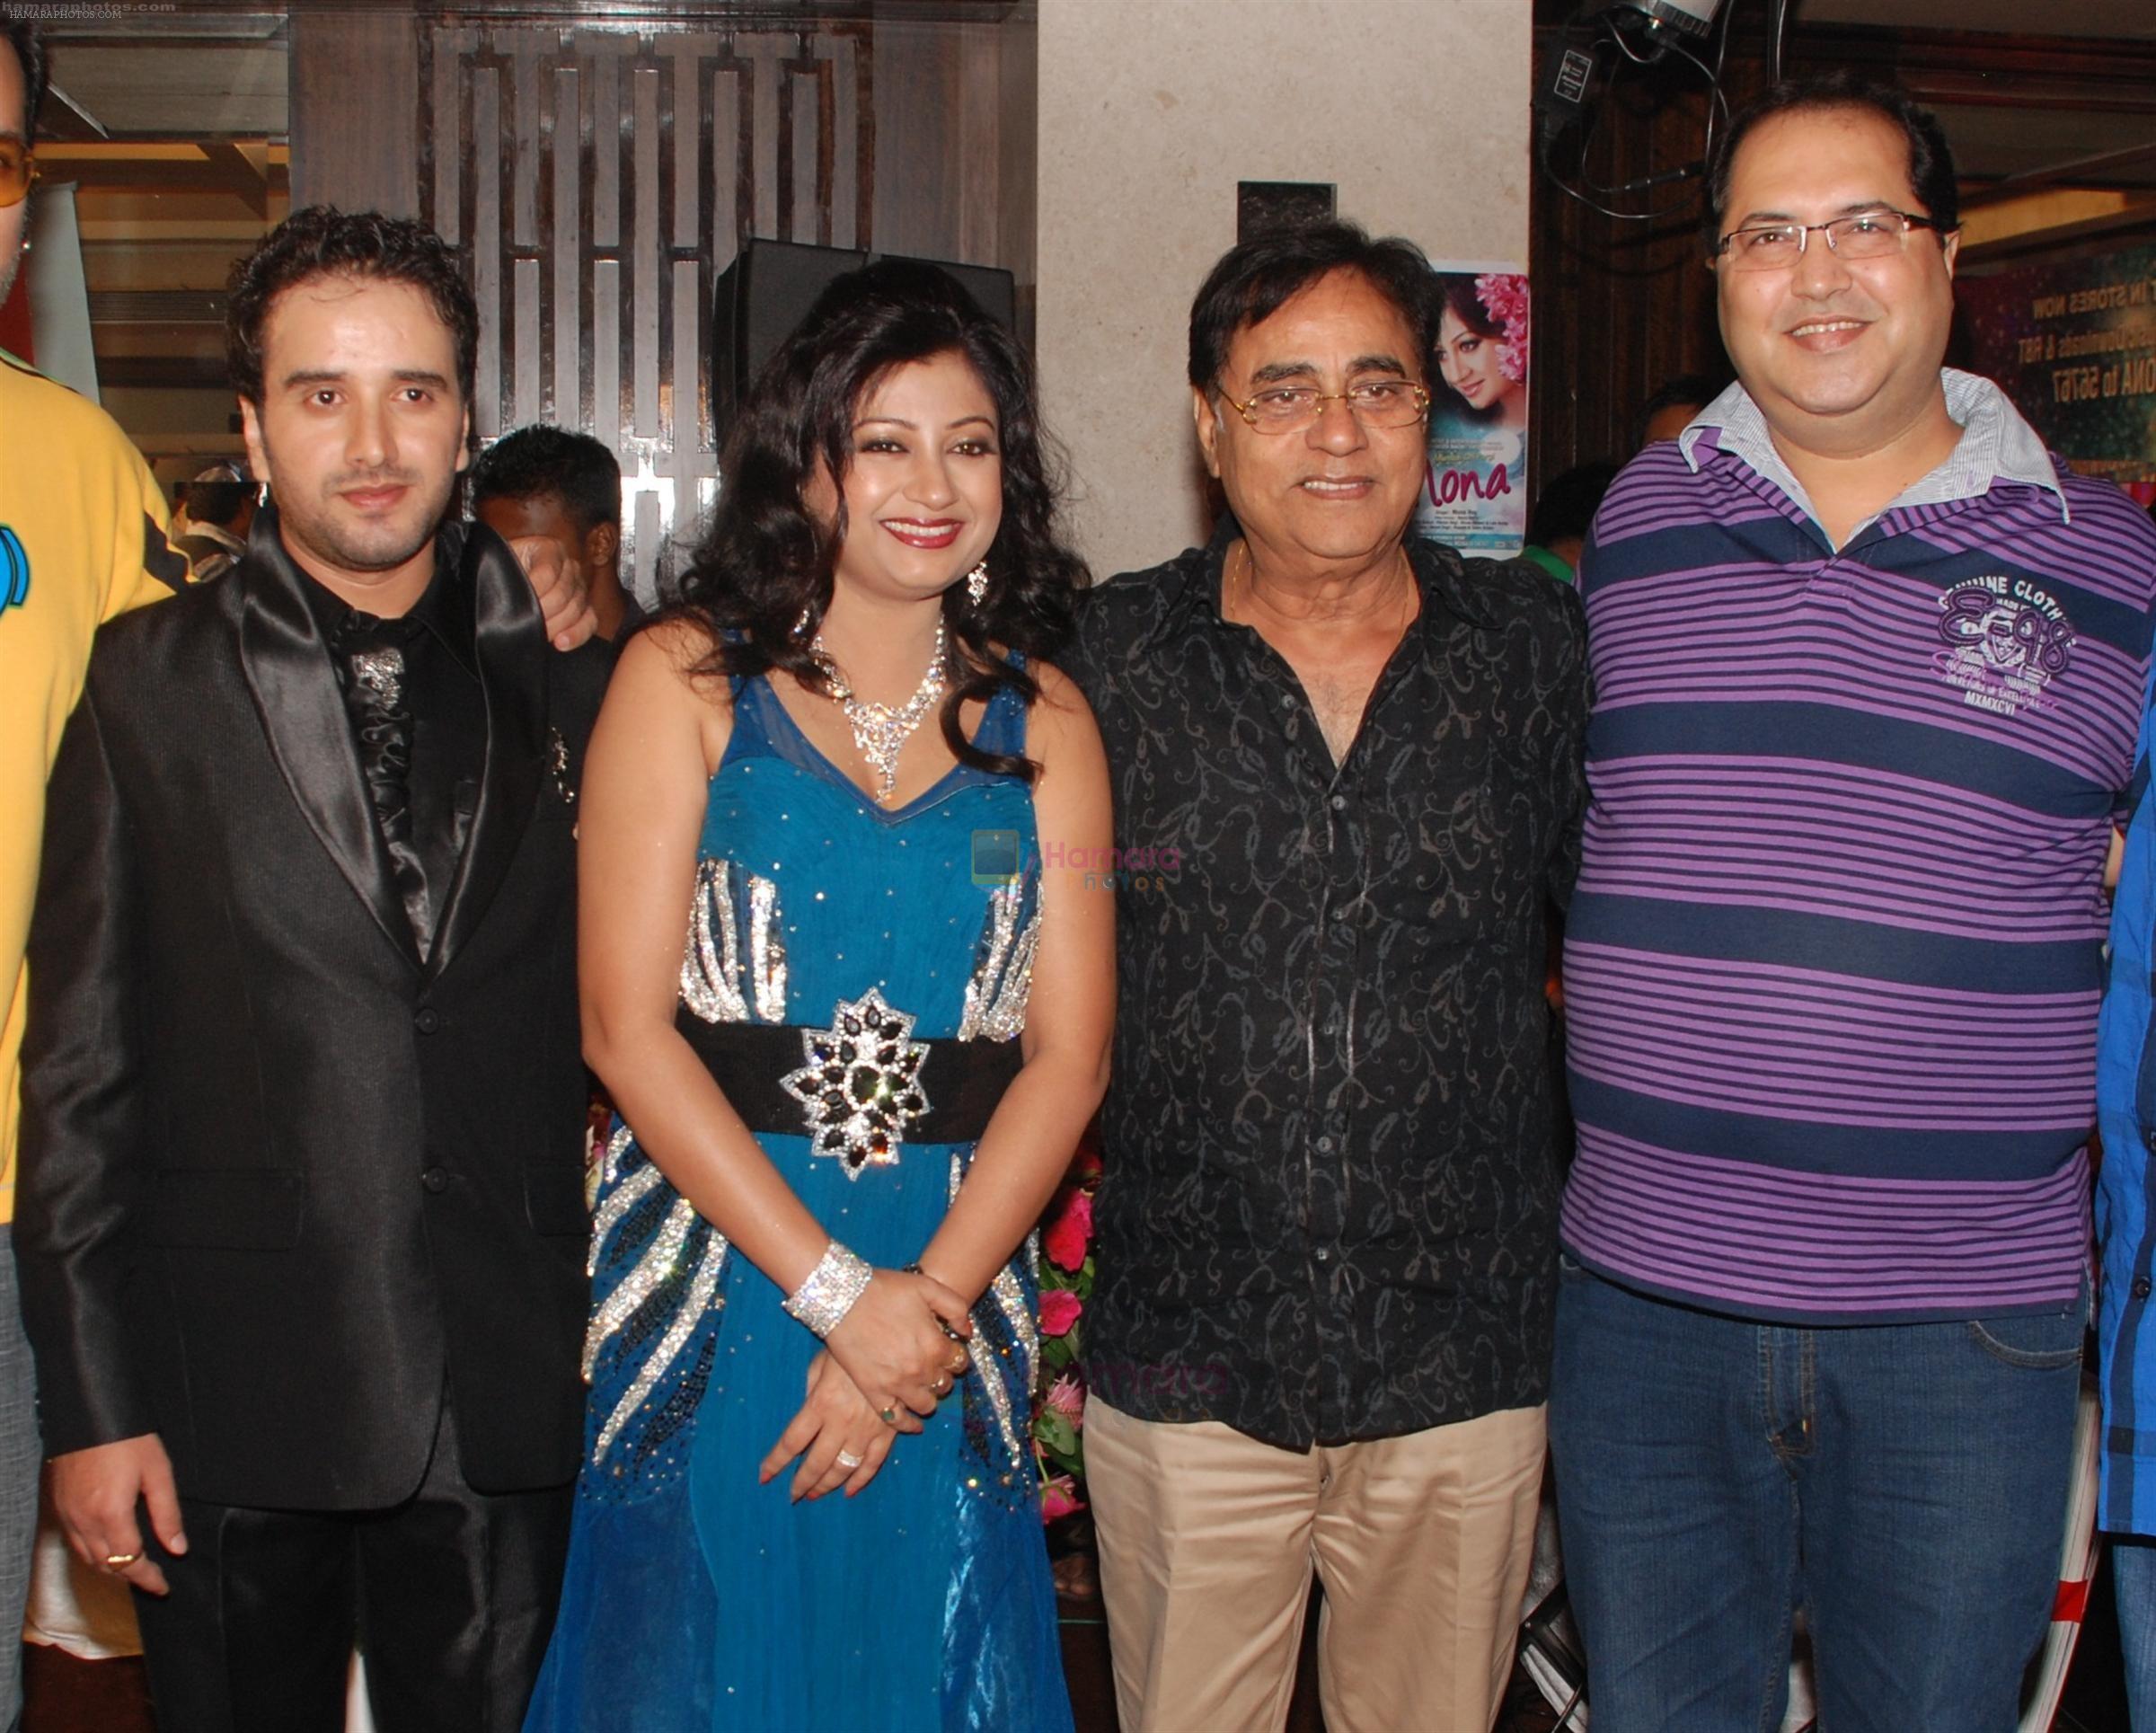 Shailendra Mishra, Mona roy, Jagjit Singh, with Navin Batra at the launch of Mona Roy's latest album Mumbai Chi Porgi Mona in Time N Again, Mumbai on 23rd Aug 2011